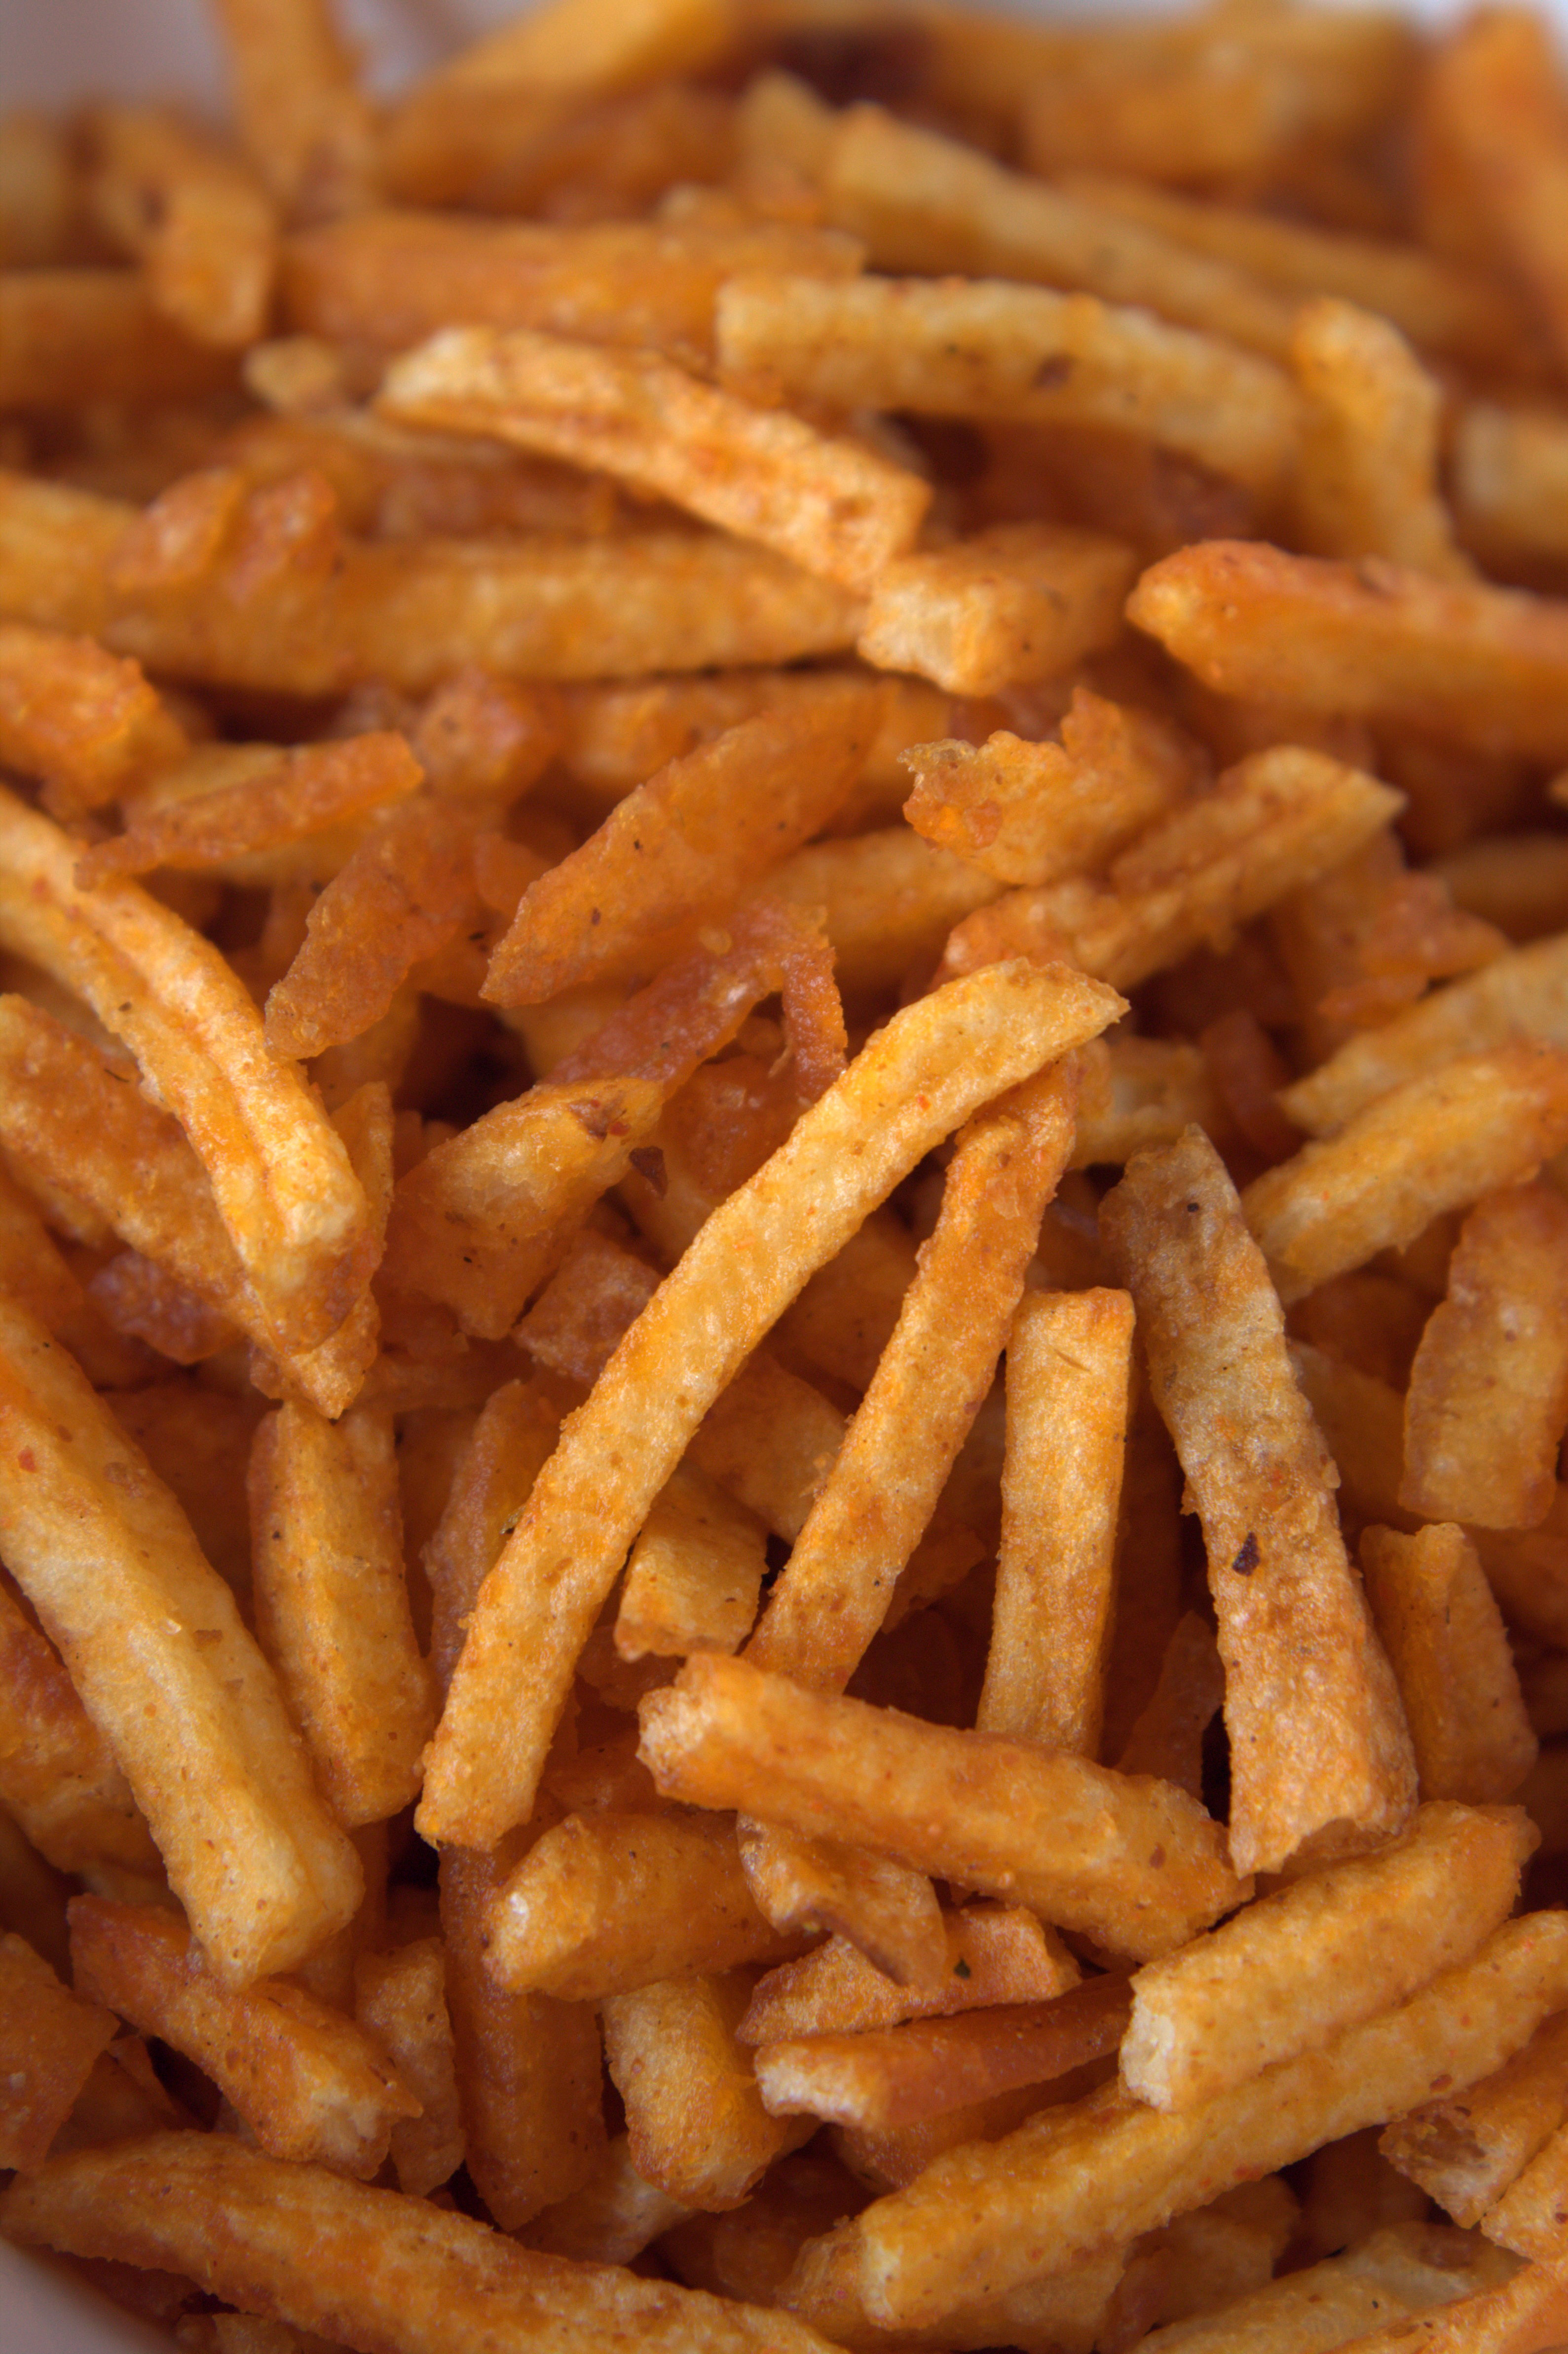 Delicious fried potatoes fries image - Free stock photo - Public Domain  photo - CC0 Images